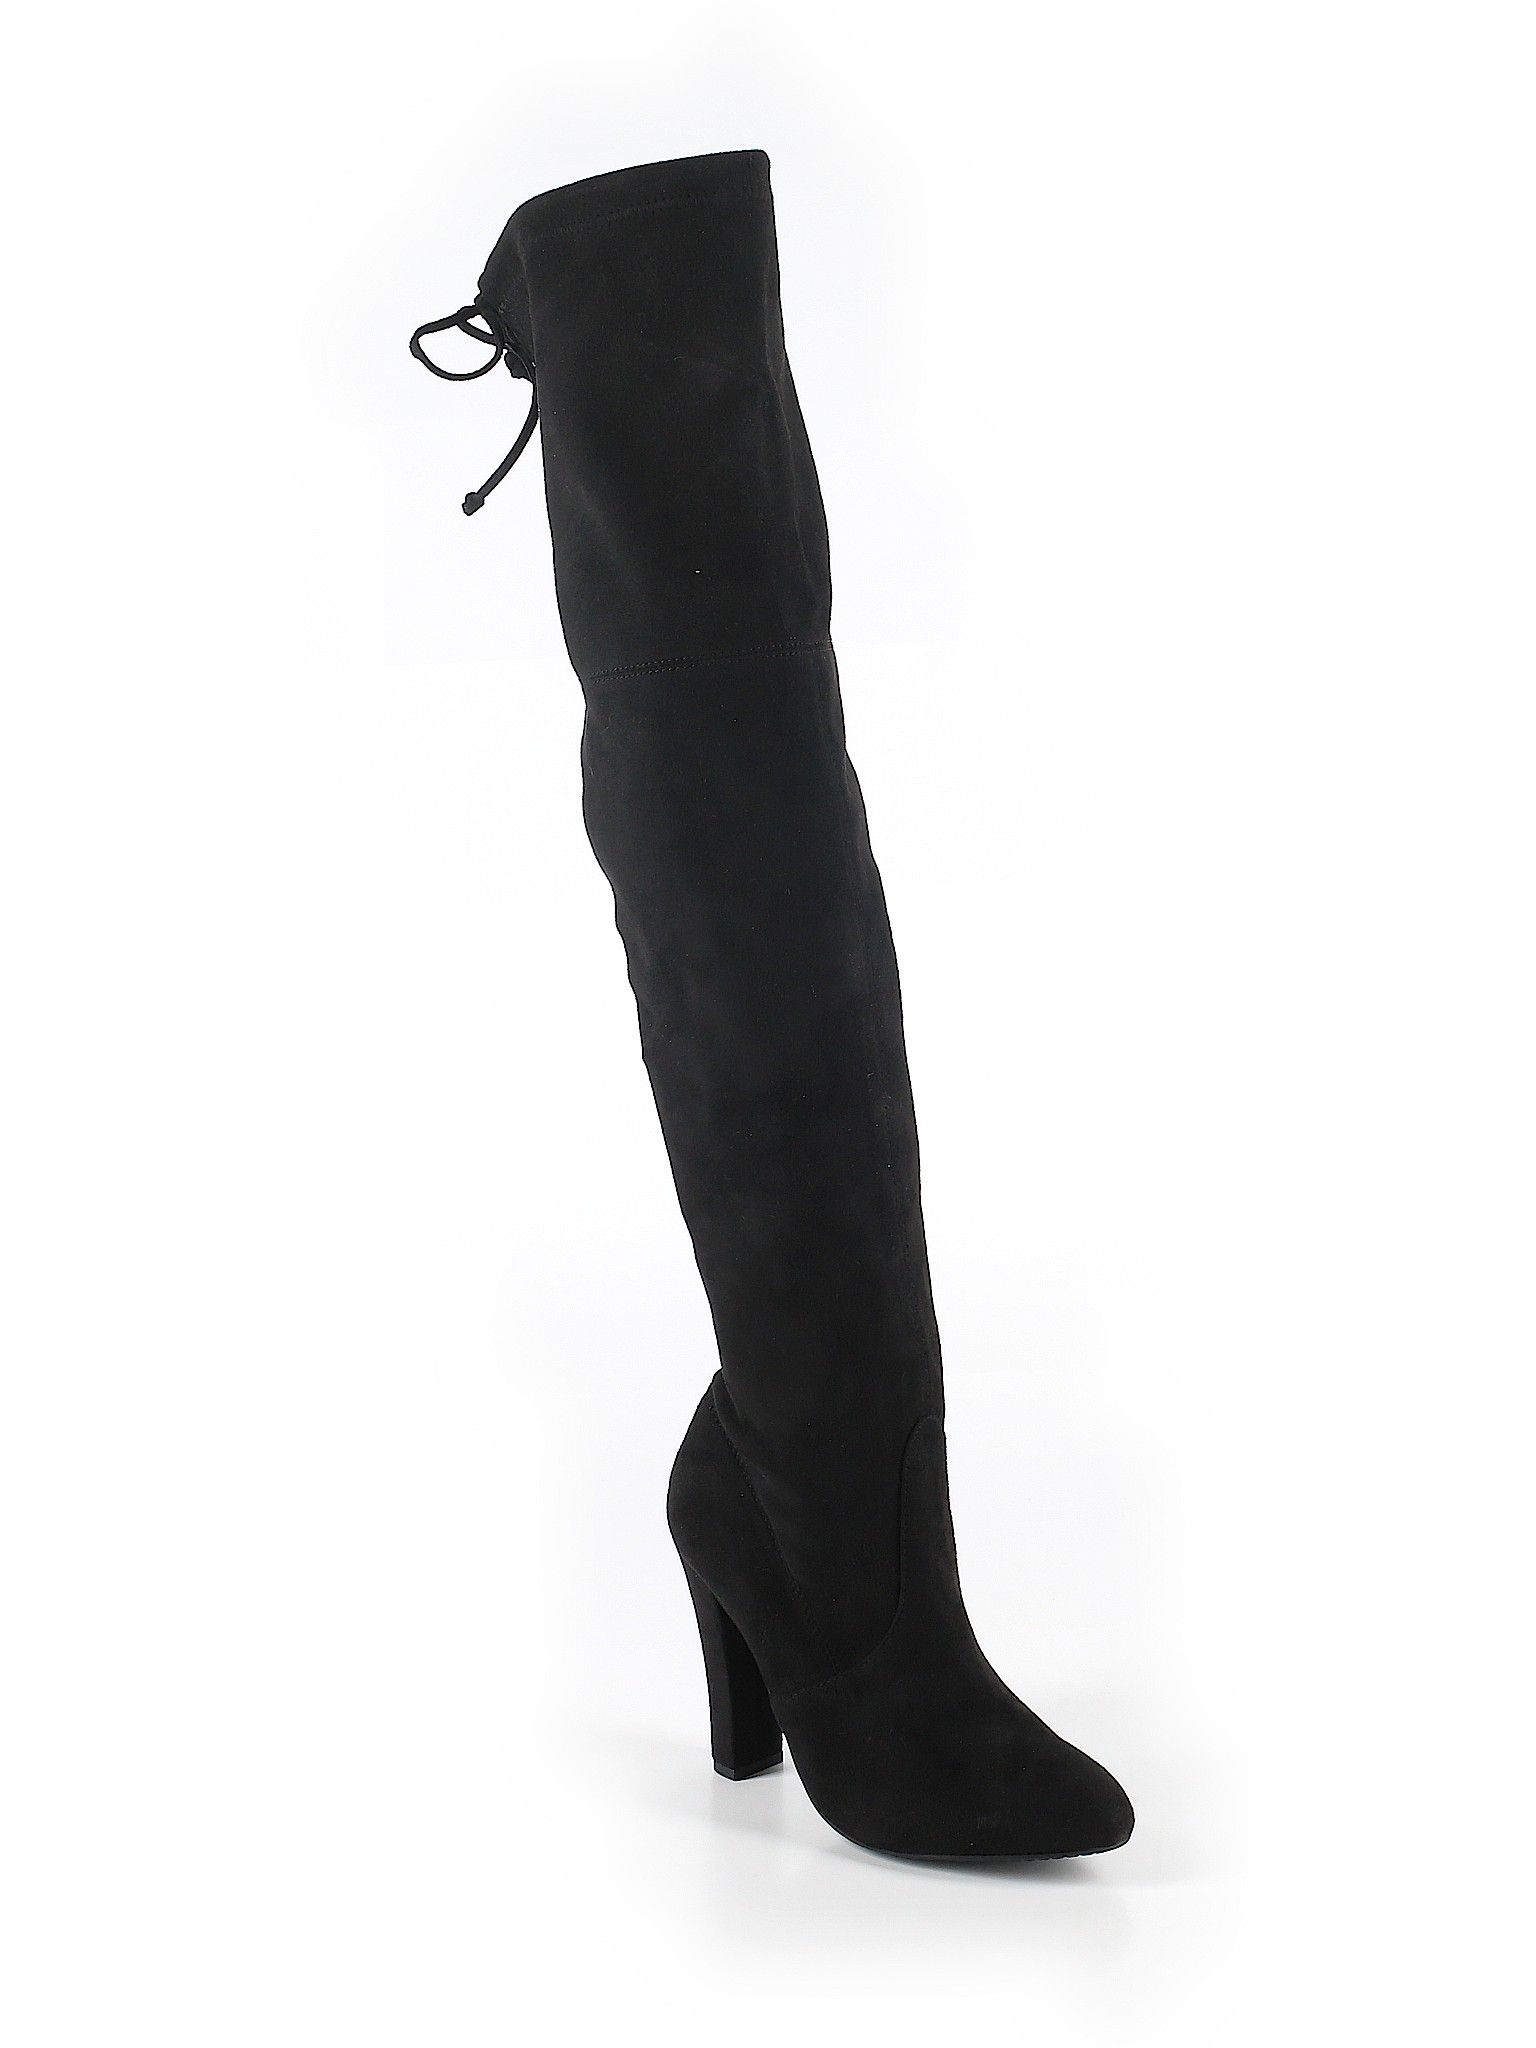 Steve Madden Boots Size 7 1/2: Black Women's Clothing - 43032987 | thredUP